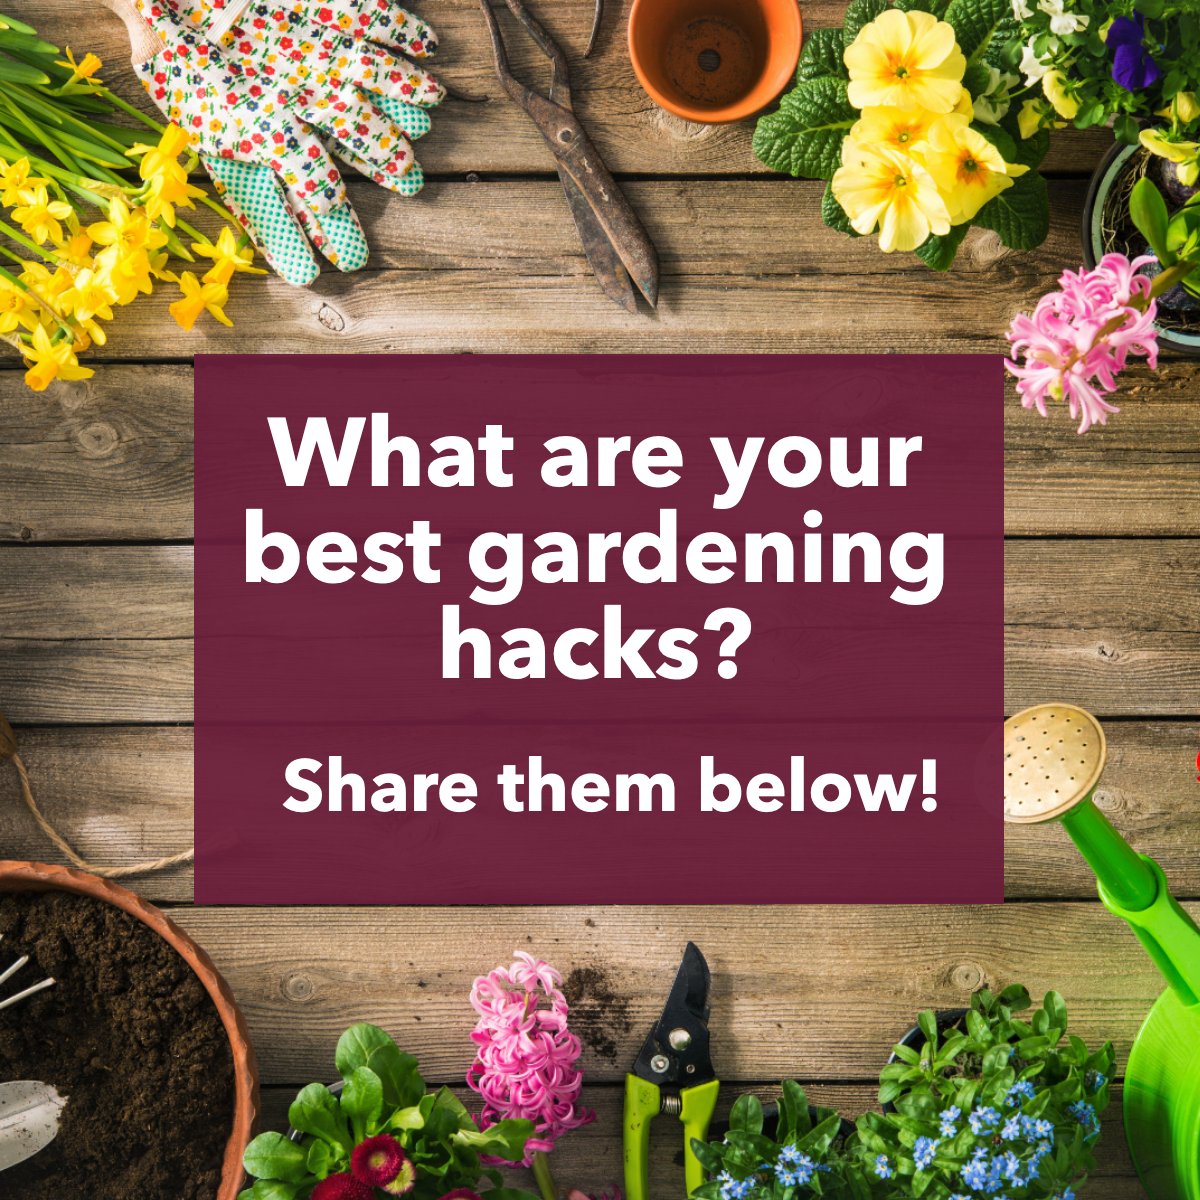 Share your best gardening tips with us. 🌻🌼

#gardeninglife    #gardeningideas    #gardeningtips    #homegardening    #GardeningHacks